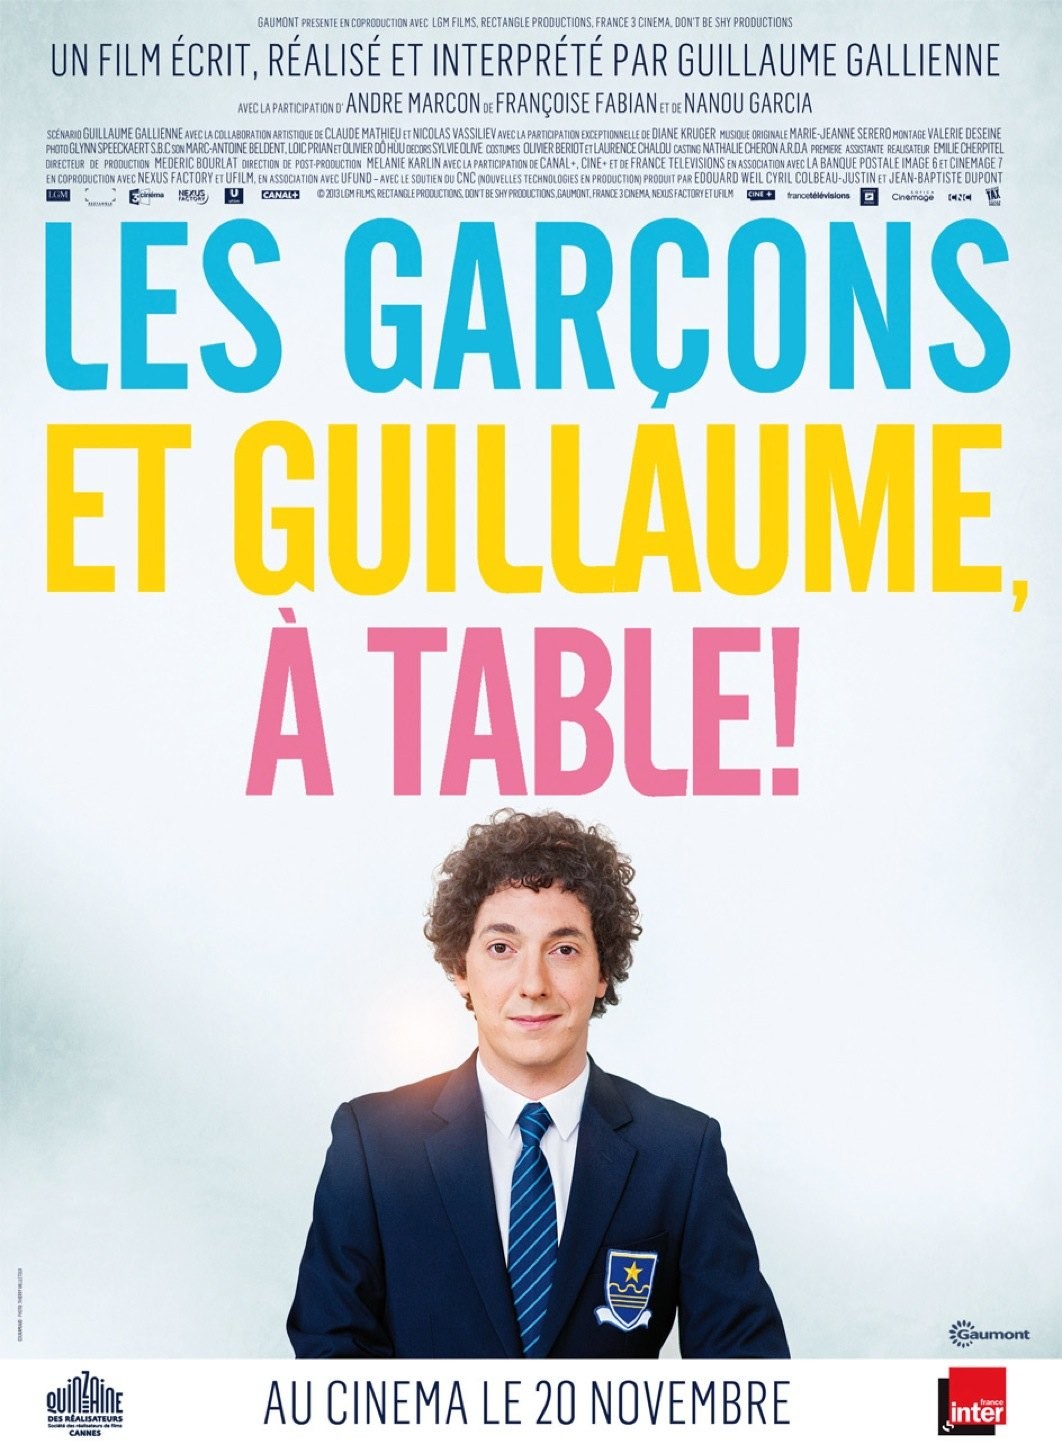 Extra Large Movie Poster Image for Les garçons et Guillaume, à table! 